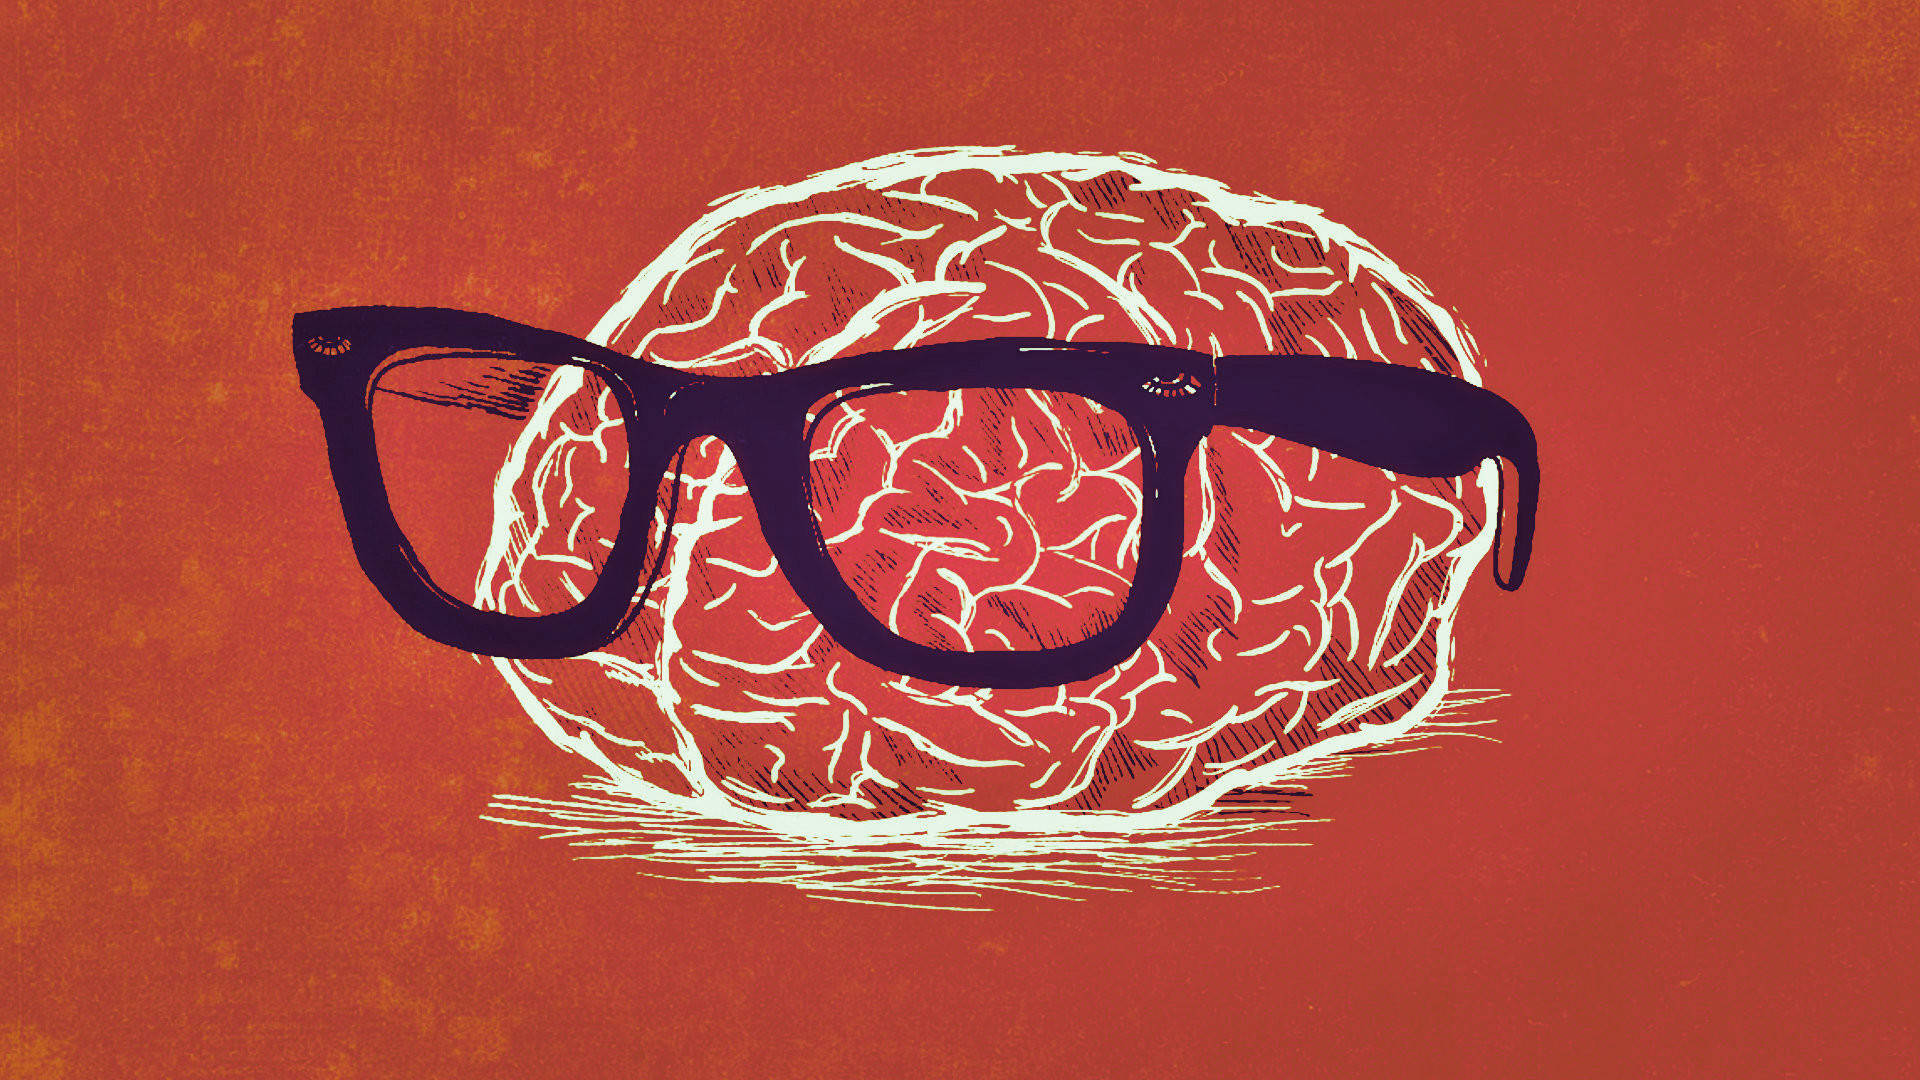 Nerd Brain With Glasses